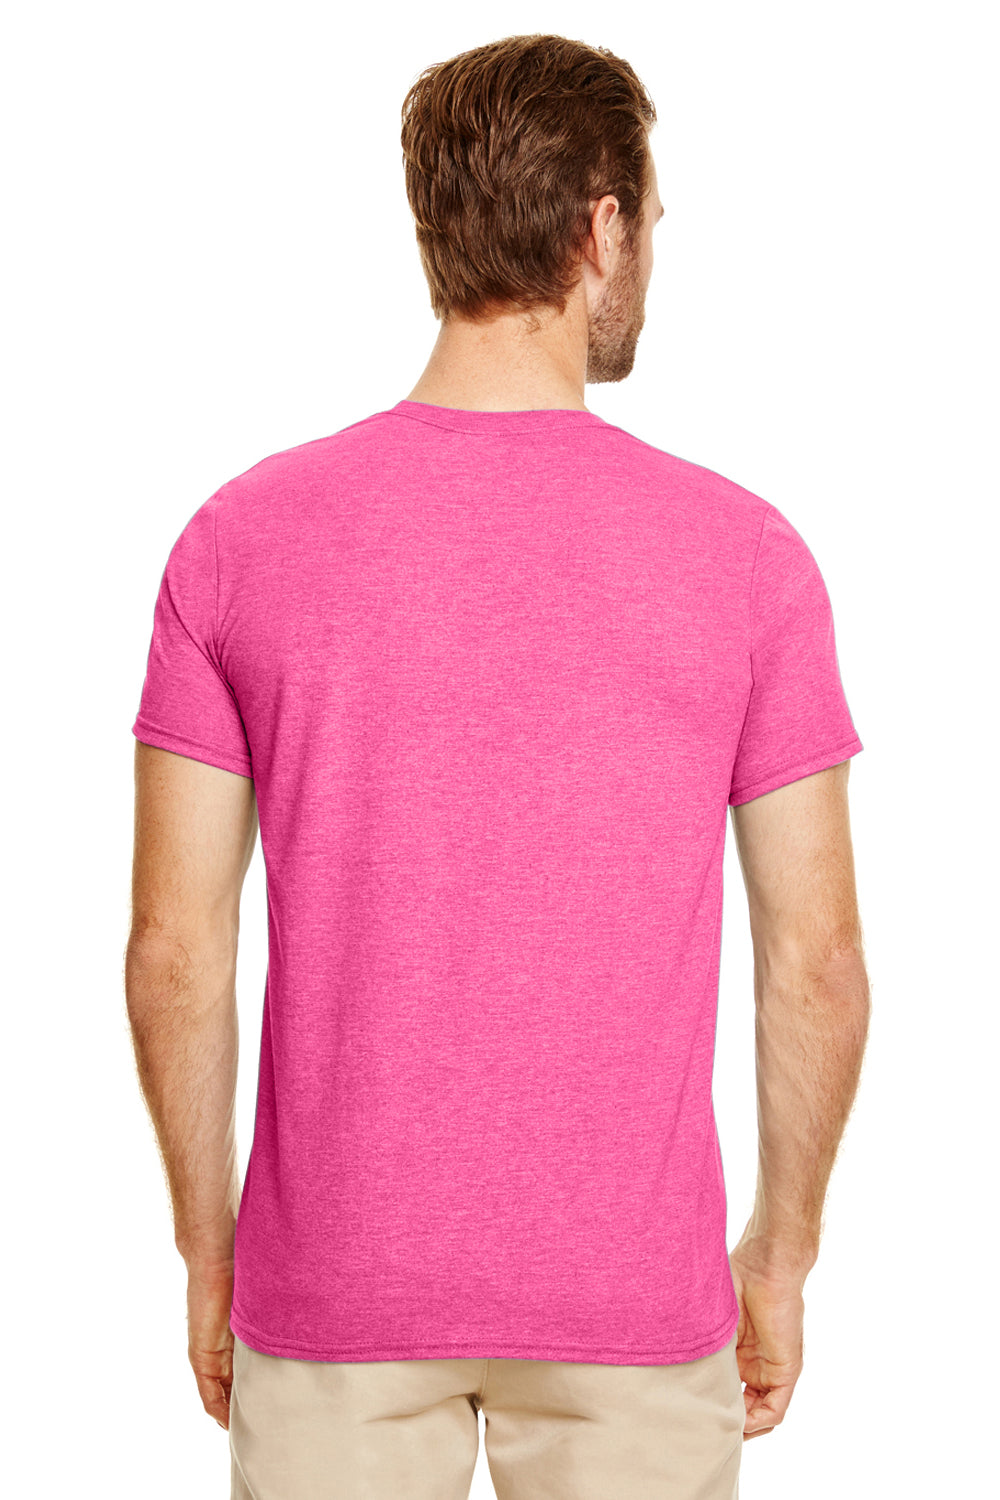 Gildan G640 Mens Softstyle Short Sleeve Crewneck T-Shirt Heather Heliconia Pink Back